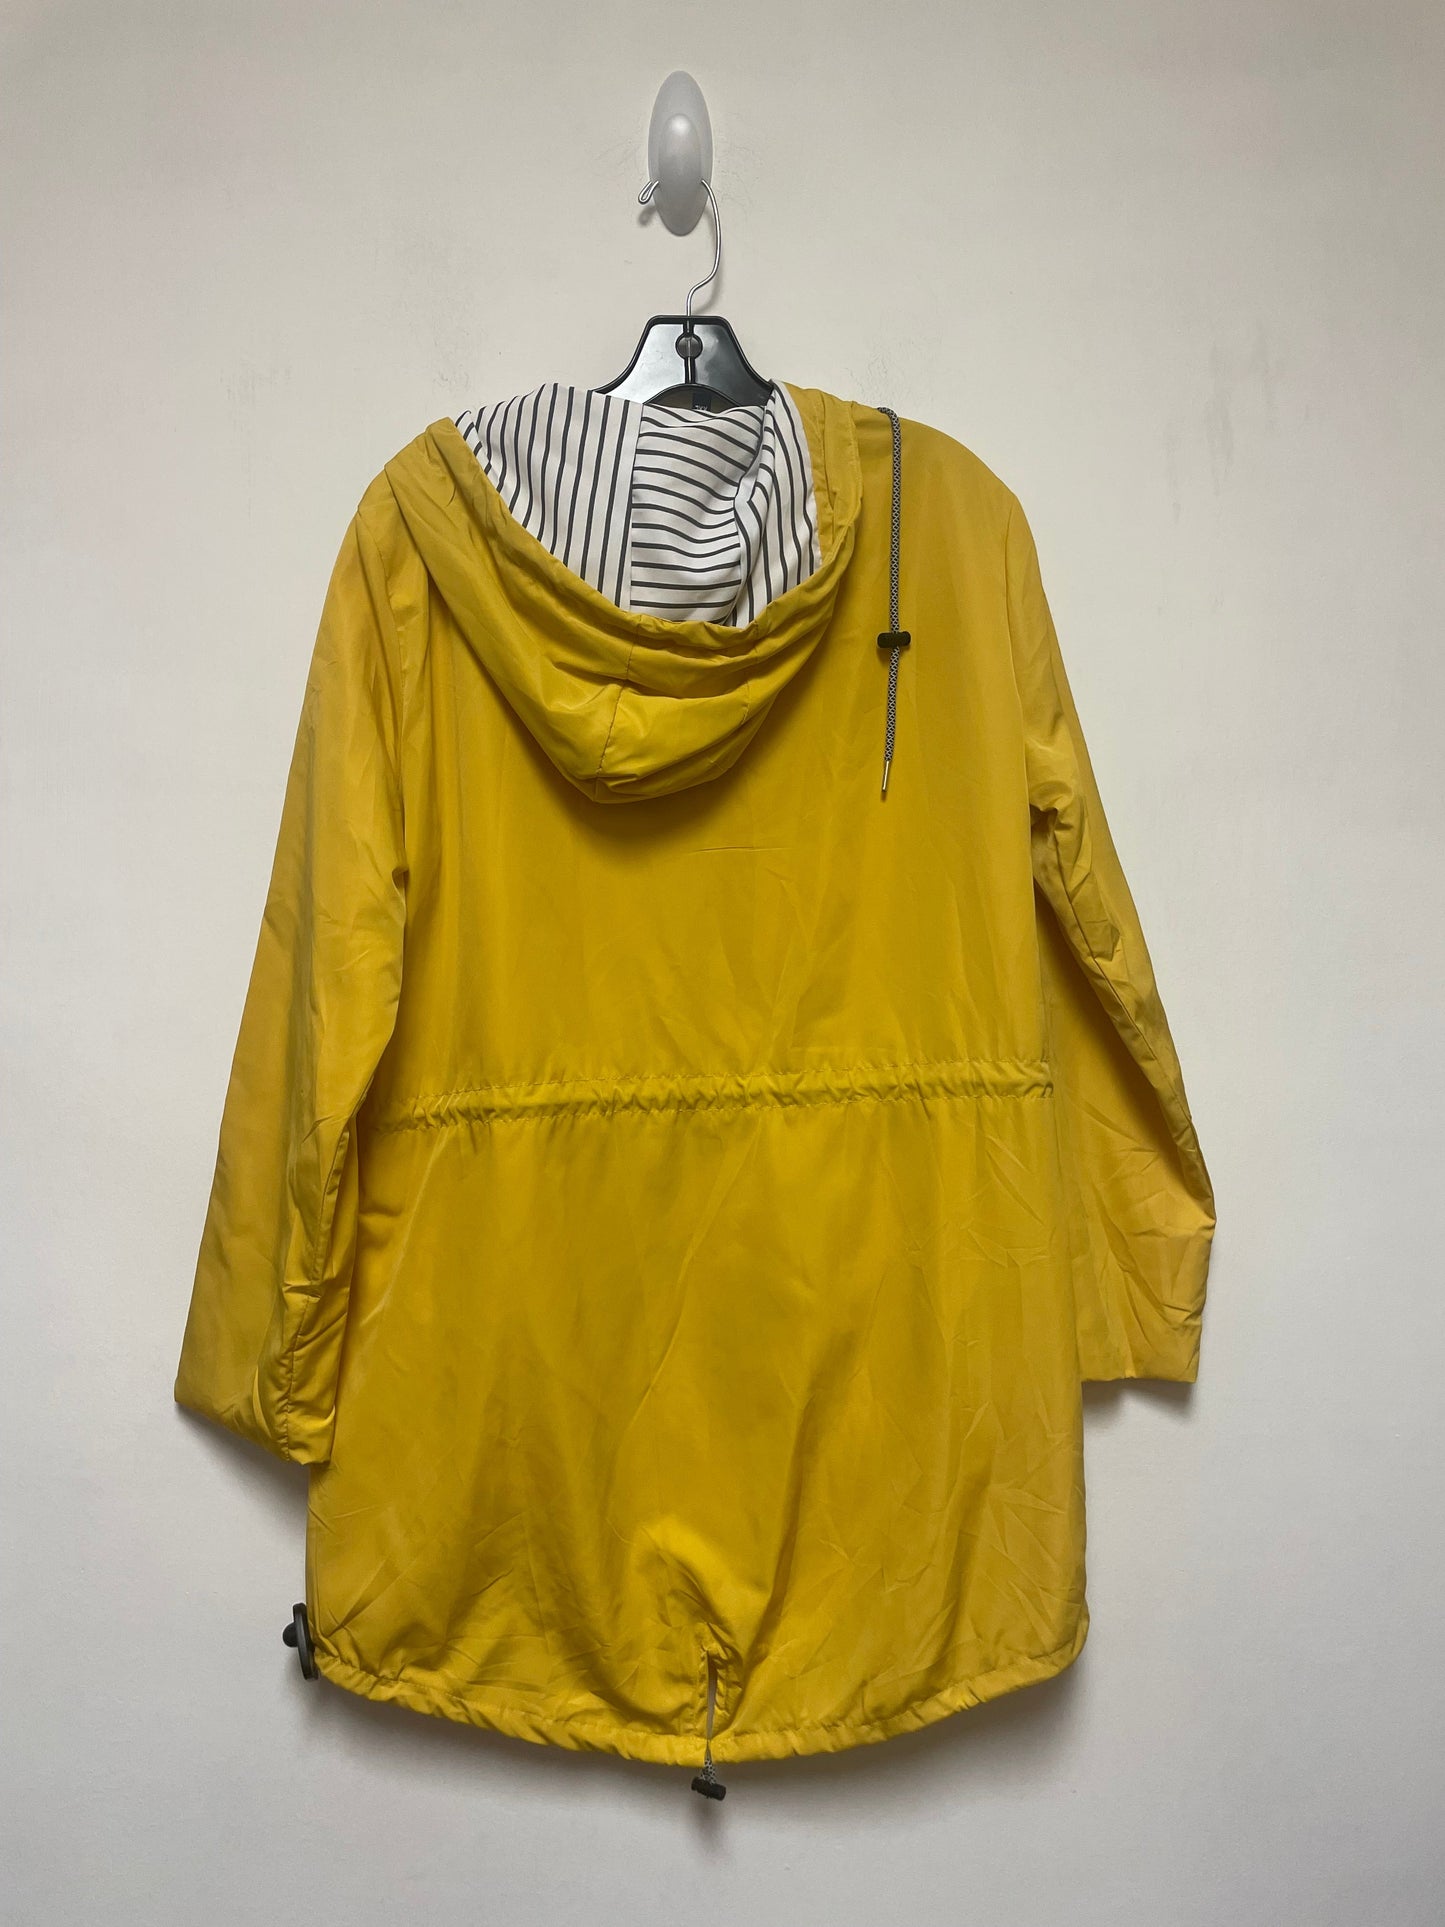 Jacket Windbreaker By Clothes Mentor  Size: Xxl